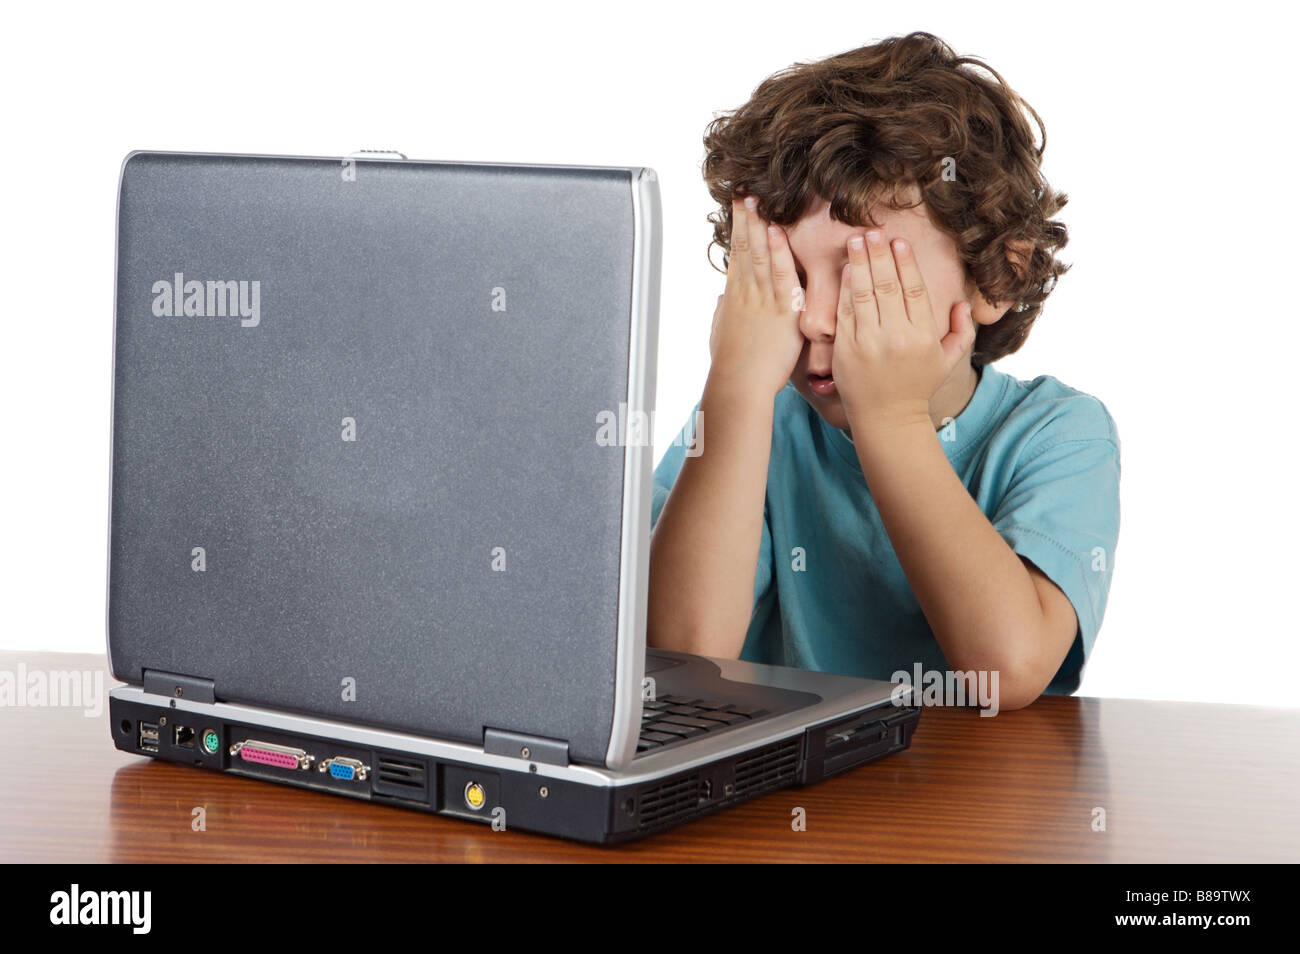 Компьютер и зрение ребенка